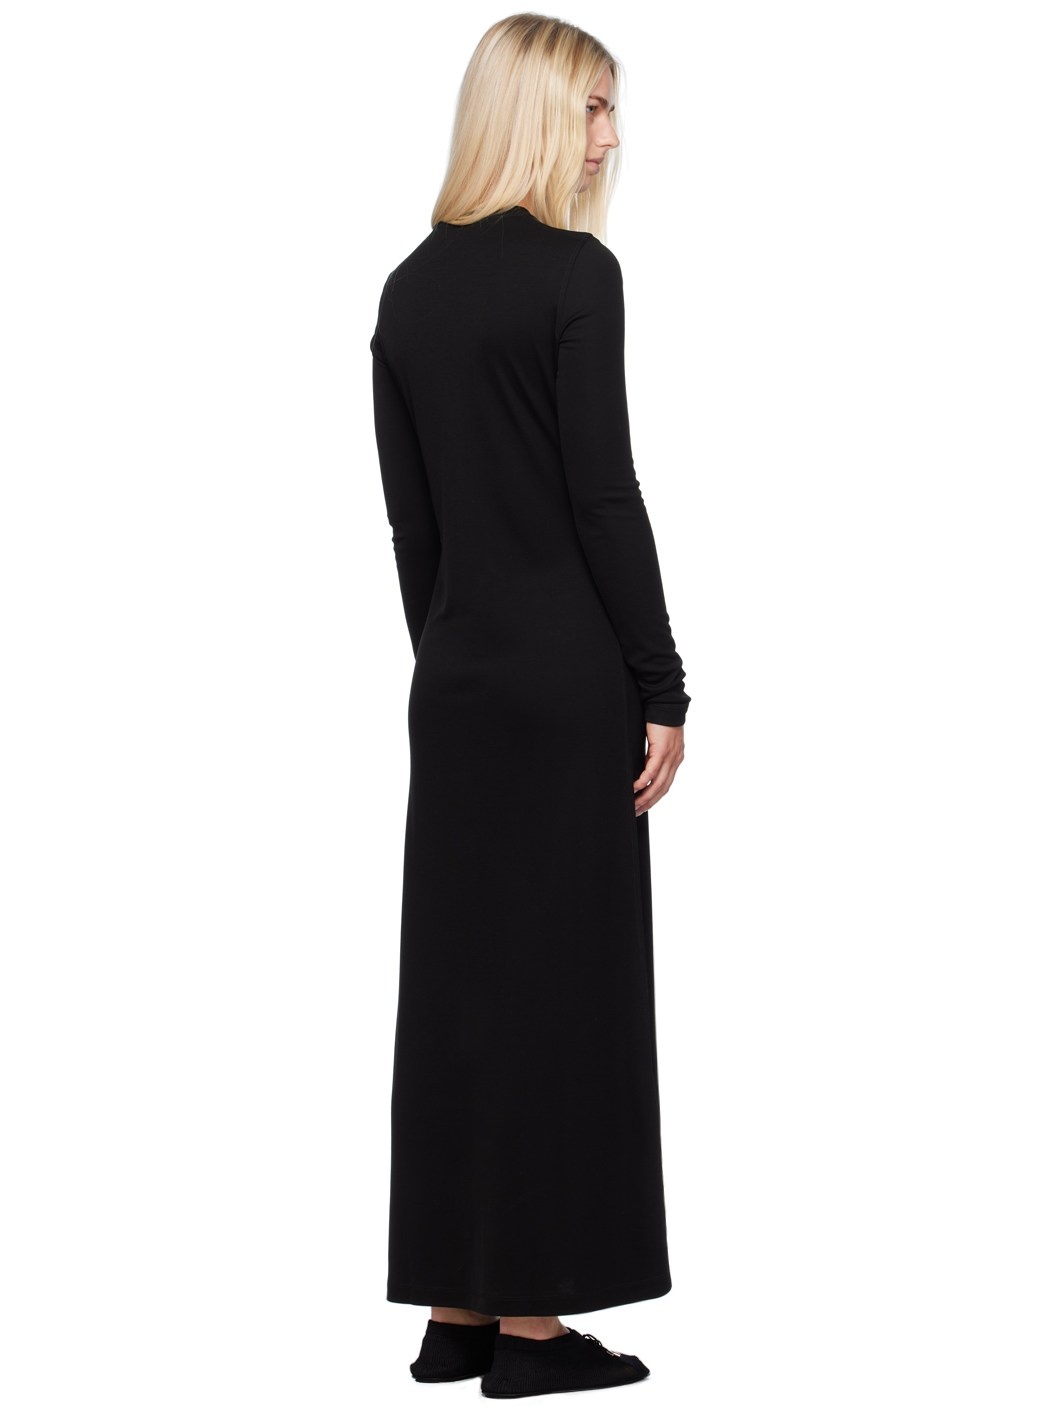 Black Long-Sleeve Maxi Dress - 3